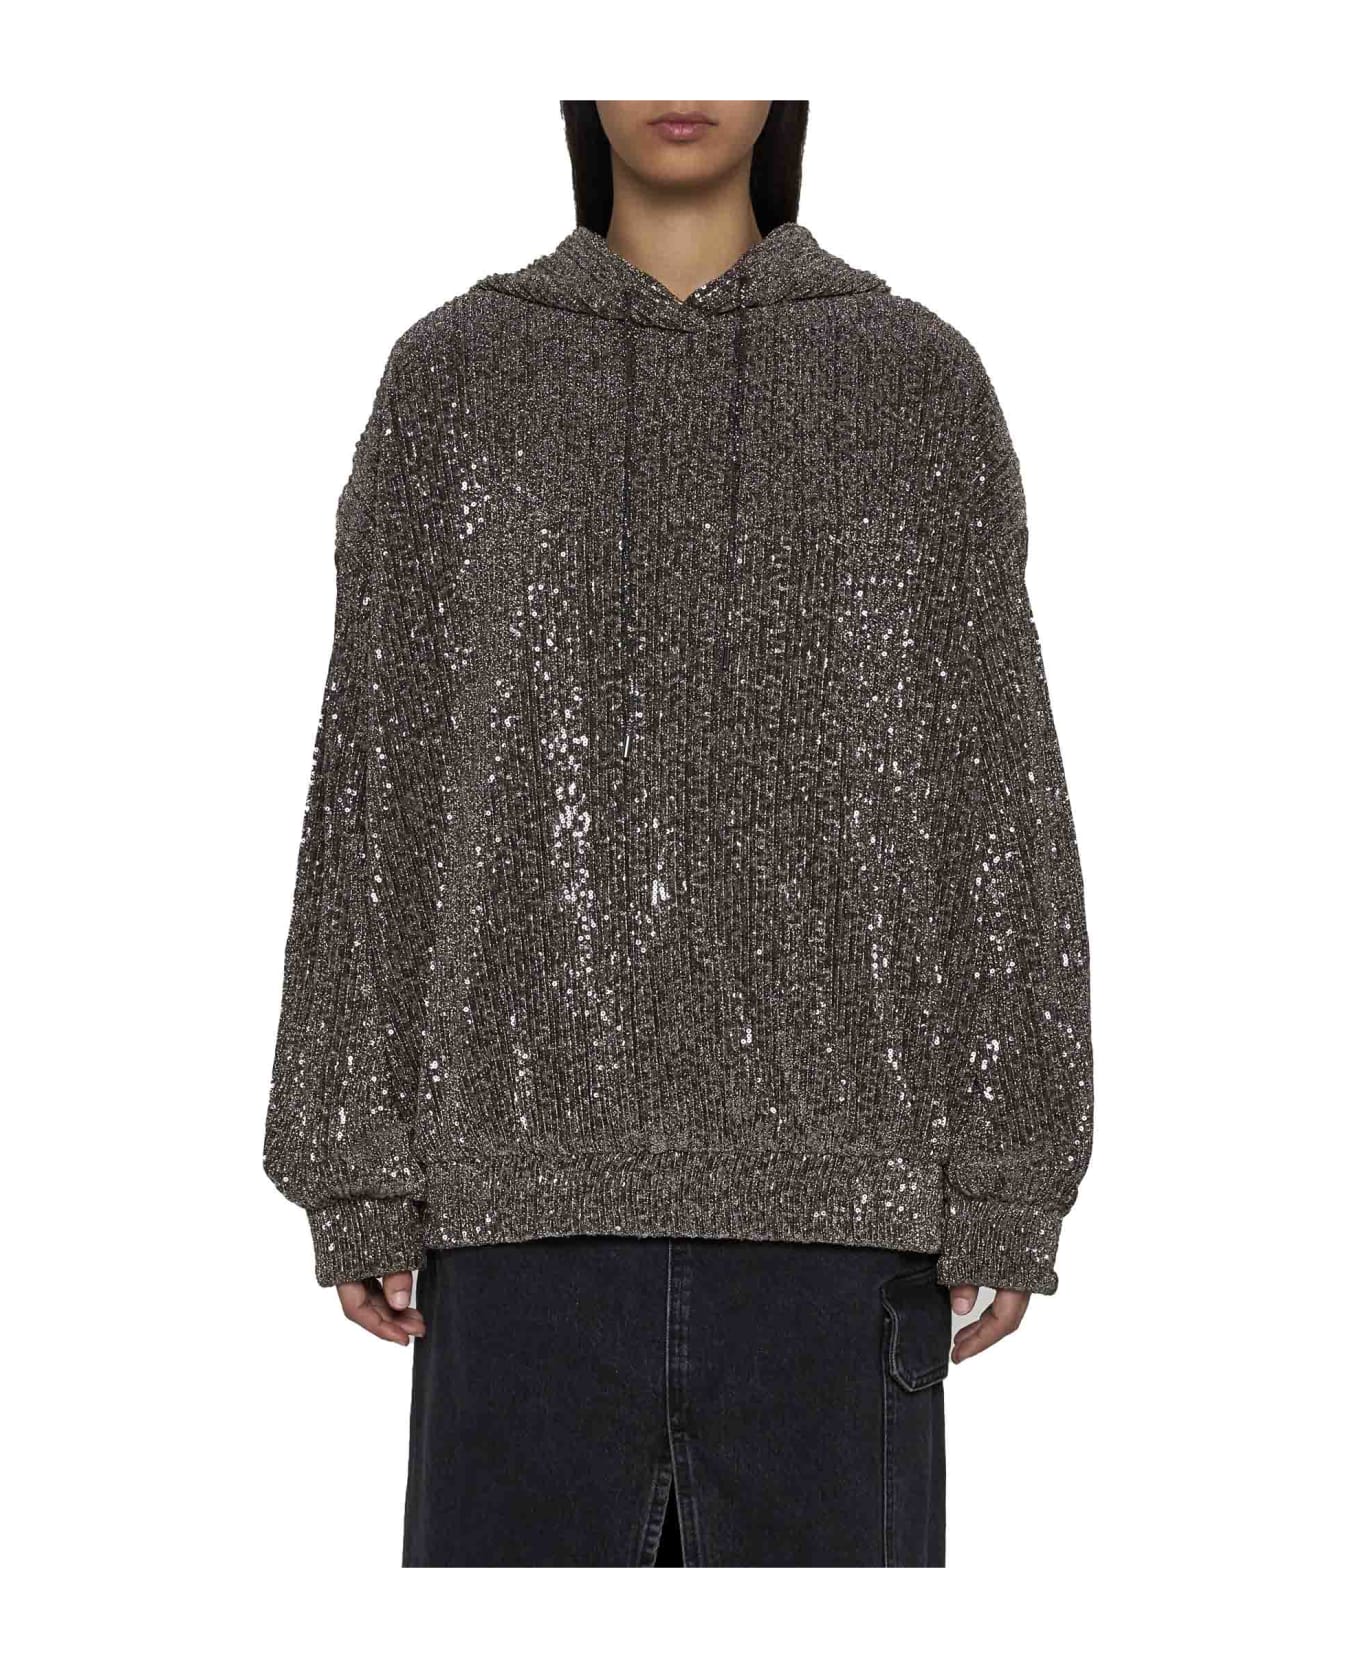 Stine Goya Sweater - Holographic sequin